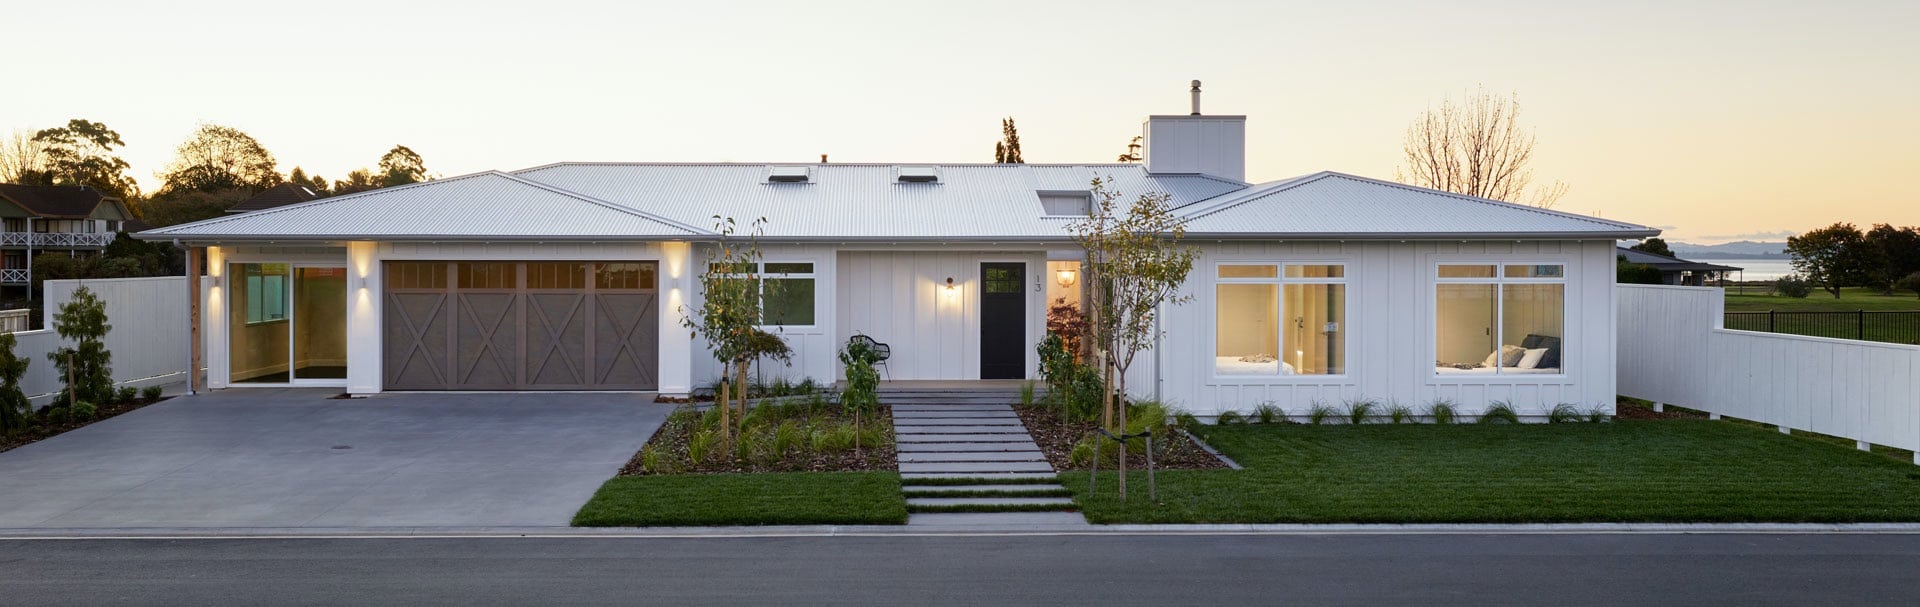 Design Builders Home - White Exterior